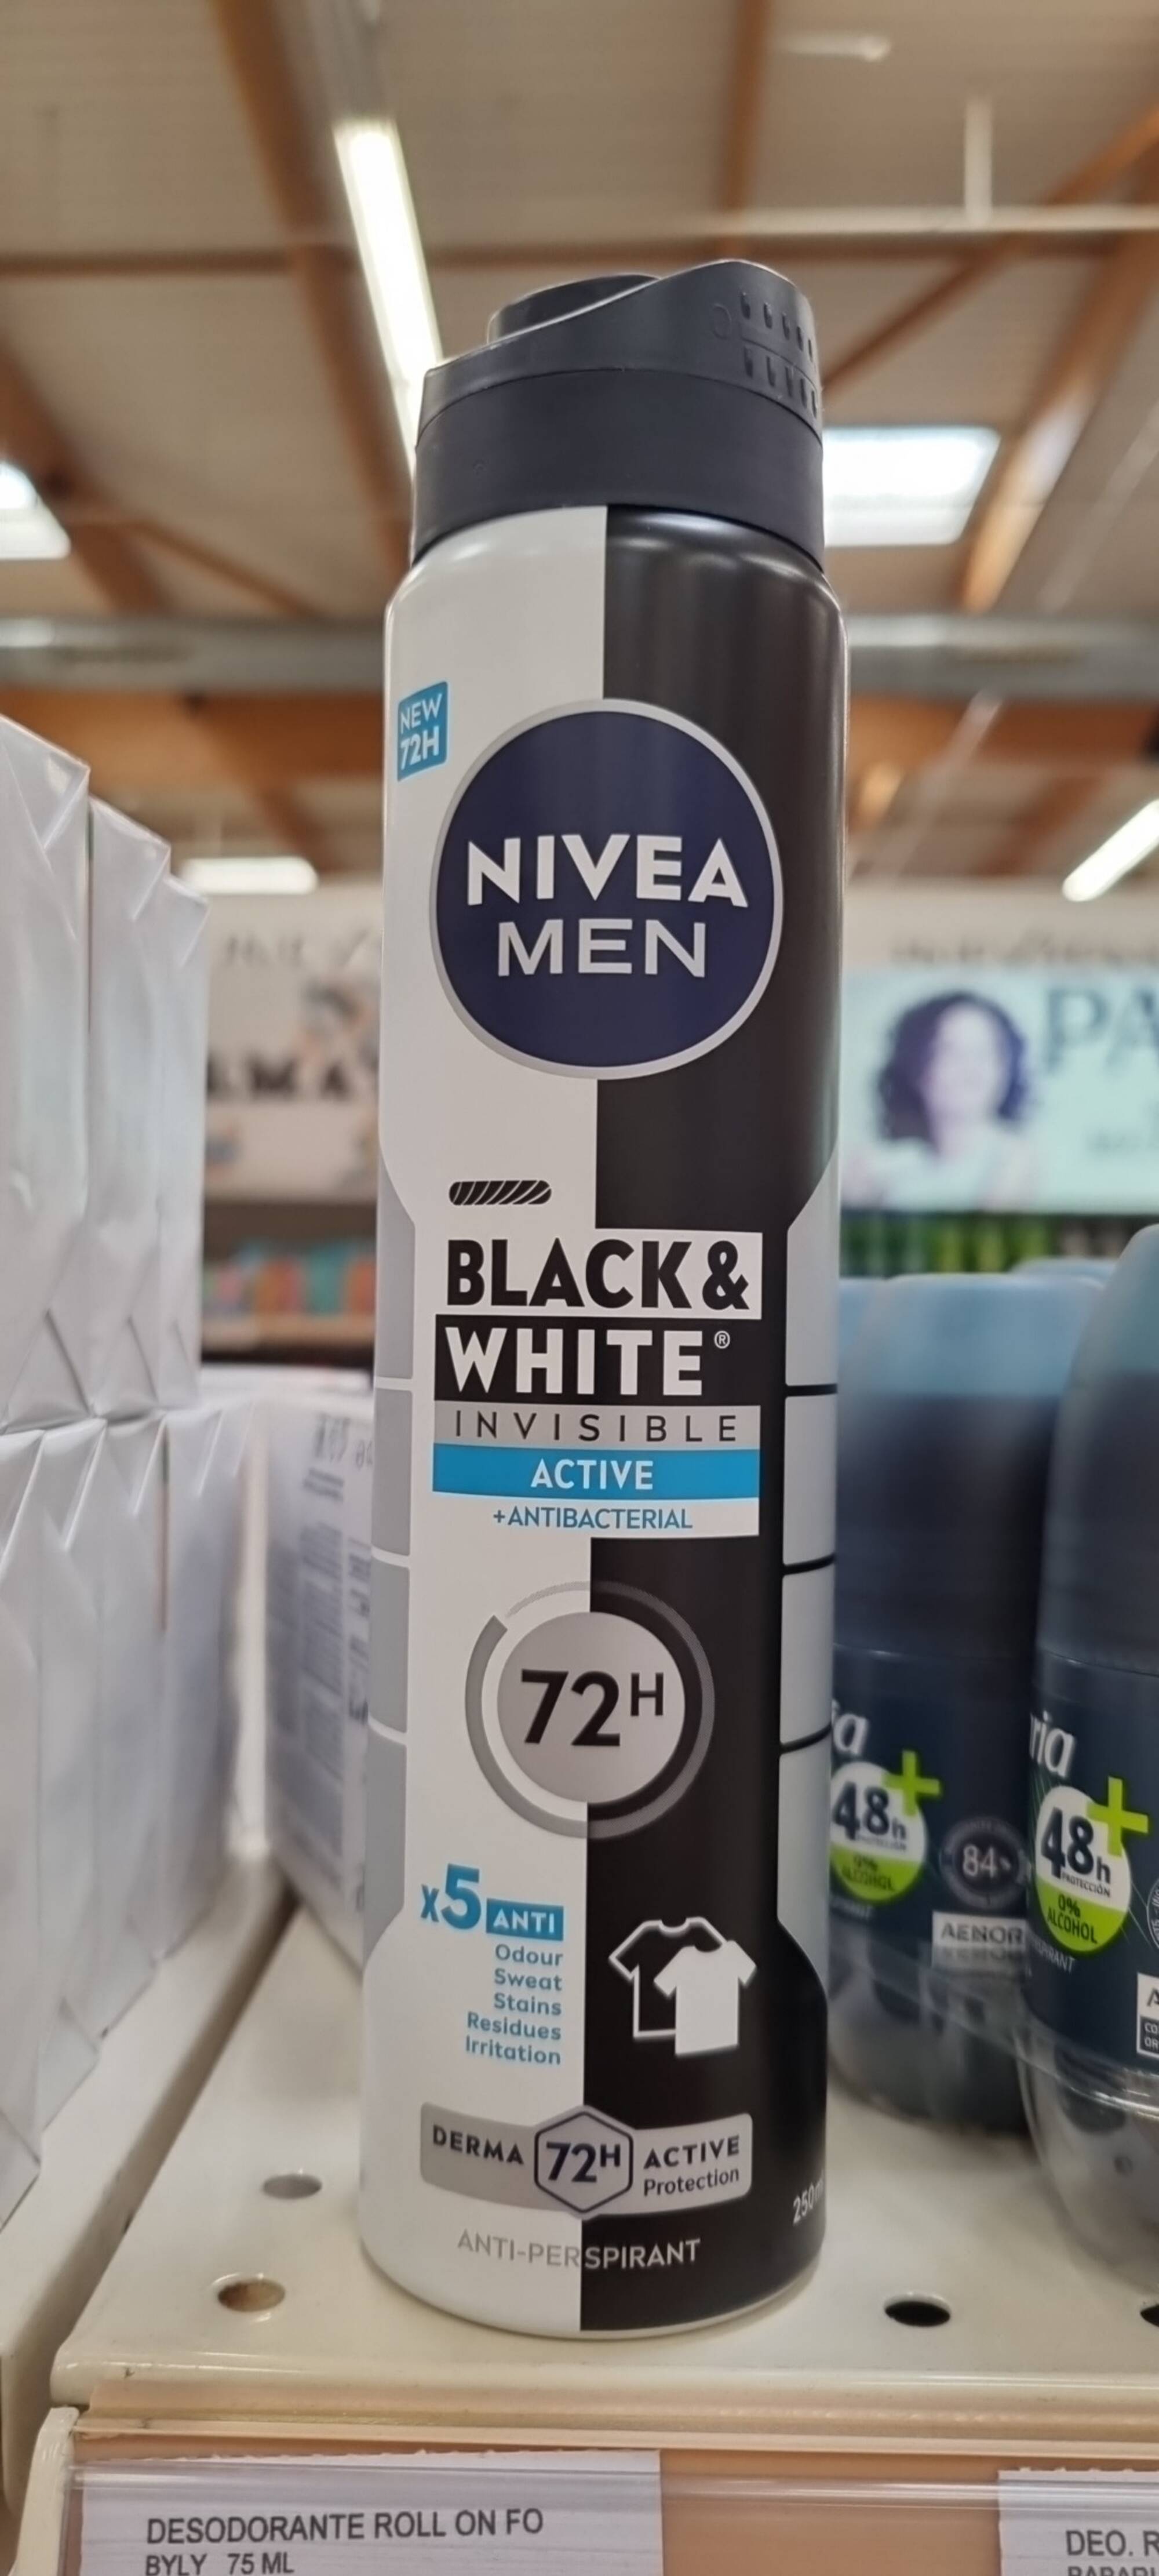 NIVEA MEN - Black & white invisible - Anti-perspirant 72h